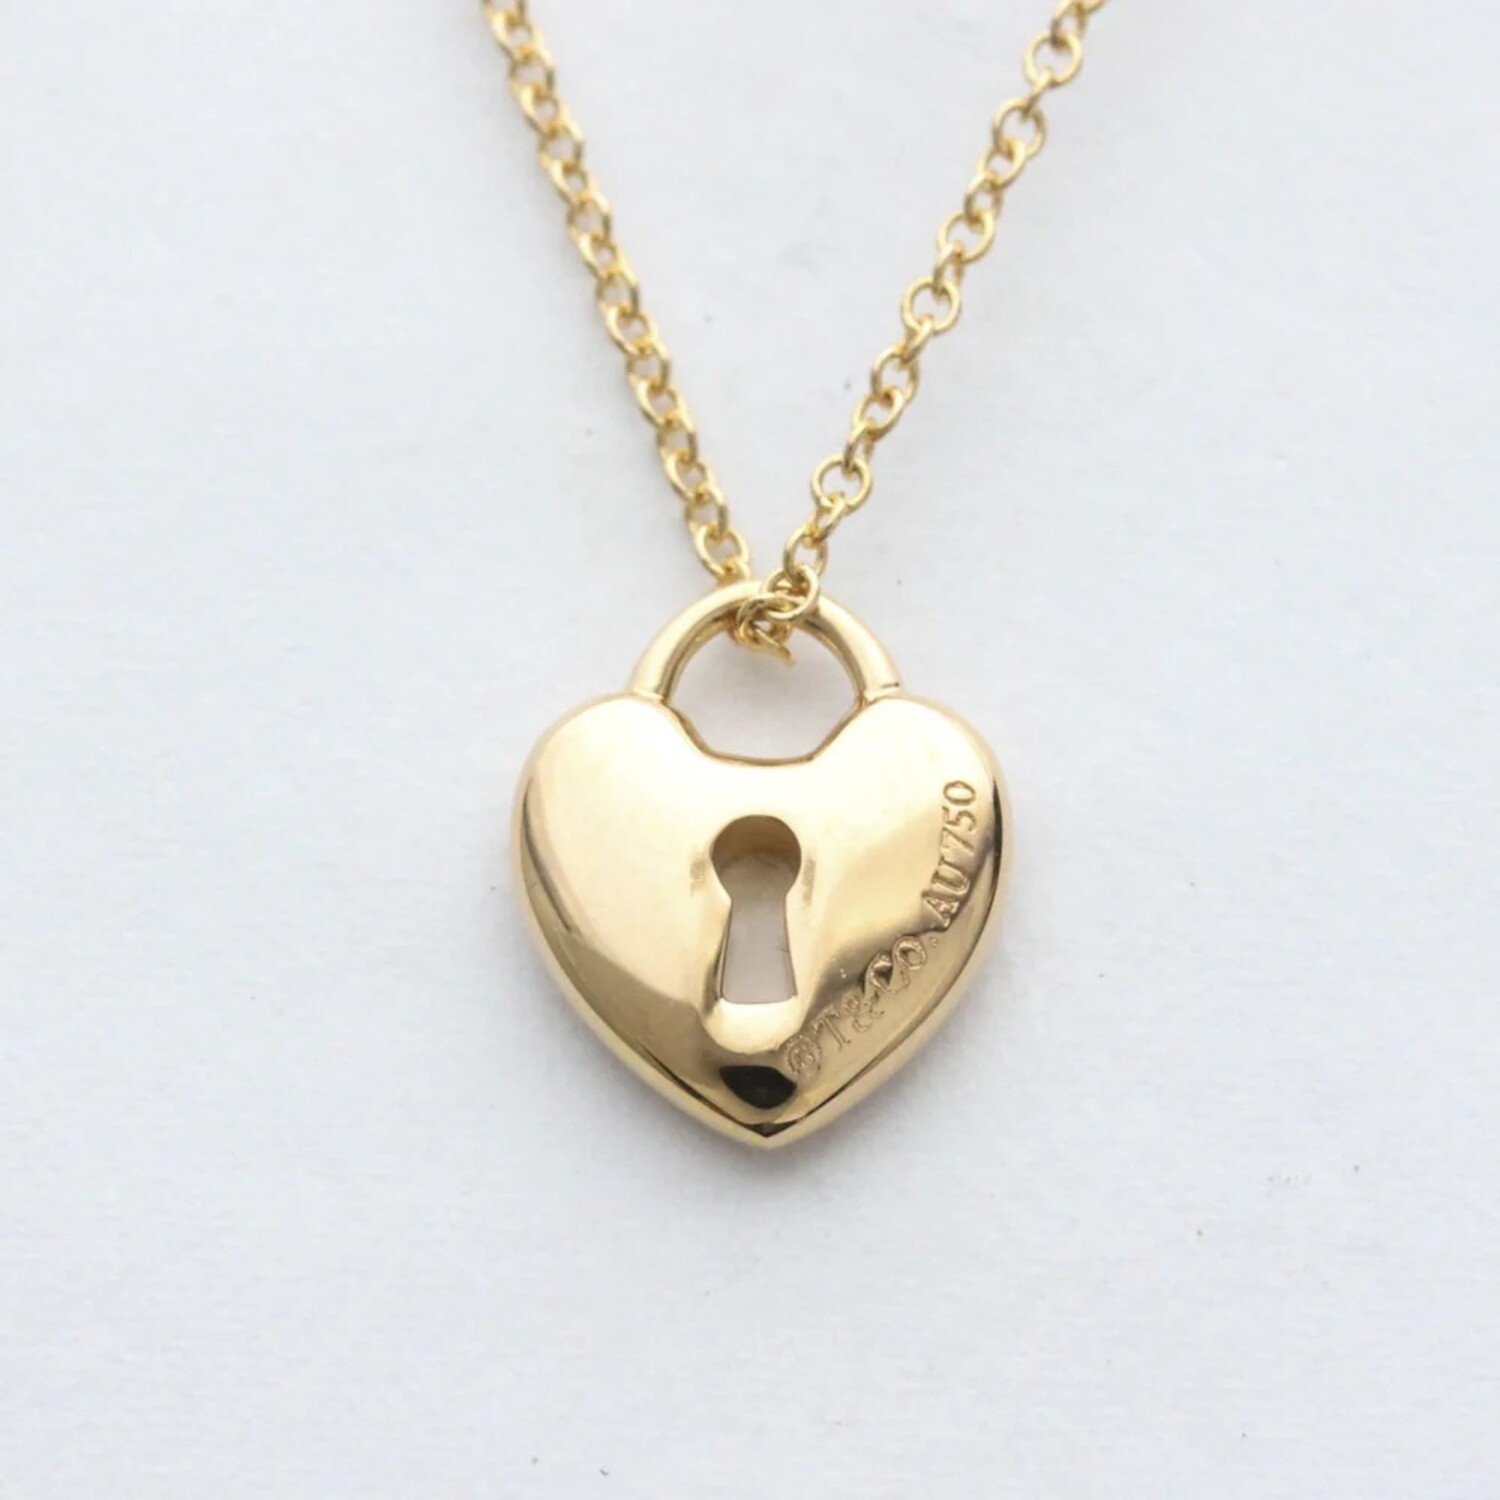 Tiffany & Co. Modern Heart Pendant Necklace